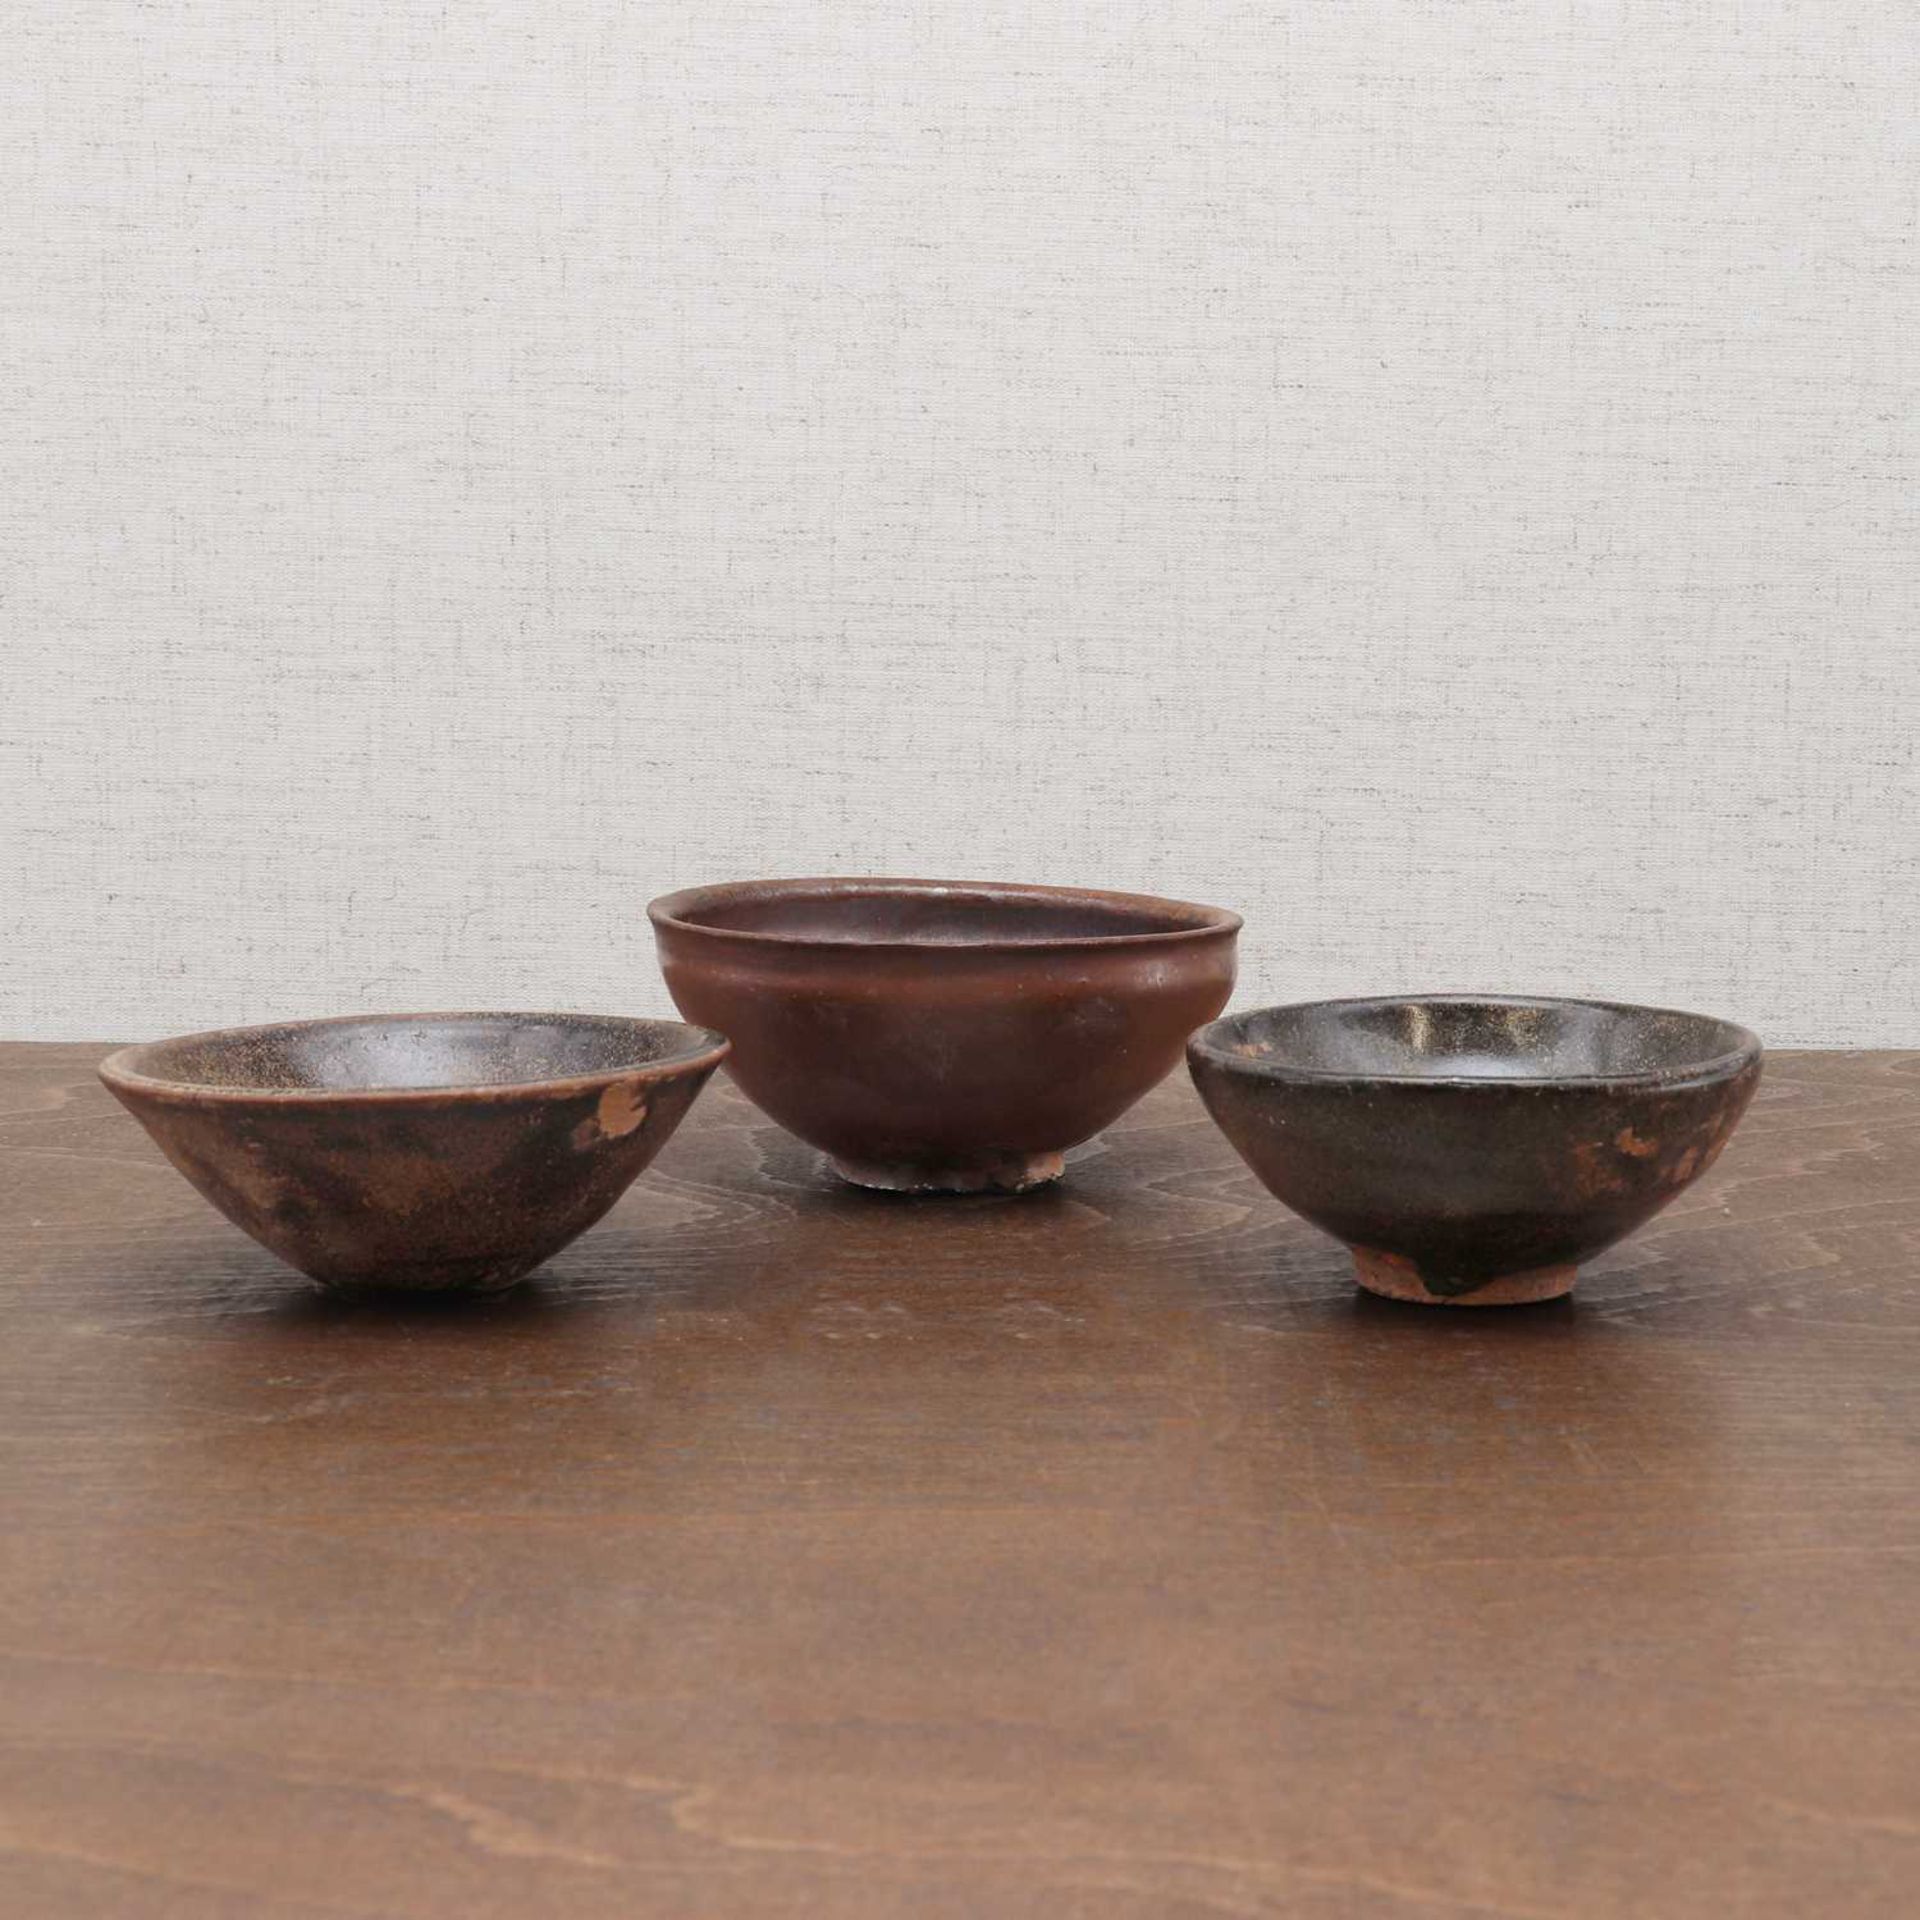 Two Chinese Jian ware tea bowls, - Image 3 of 5